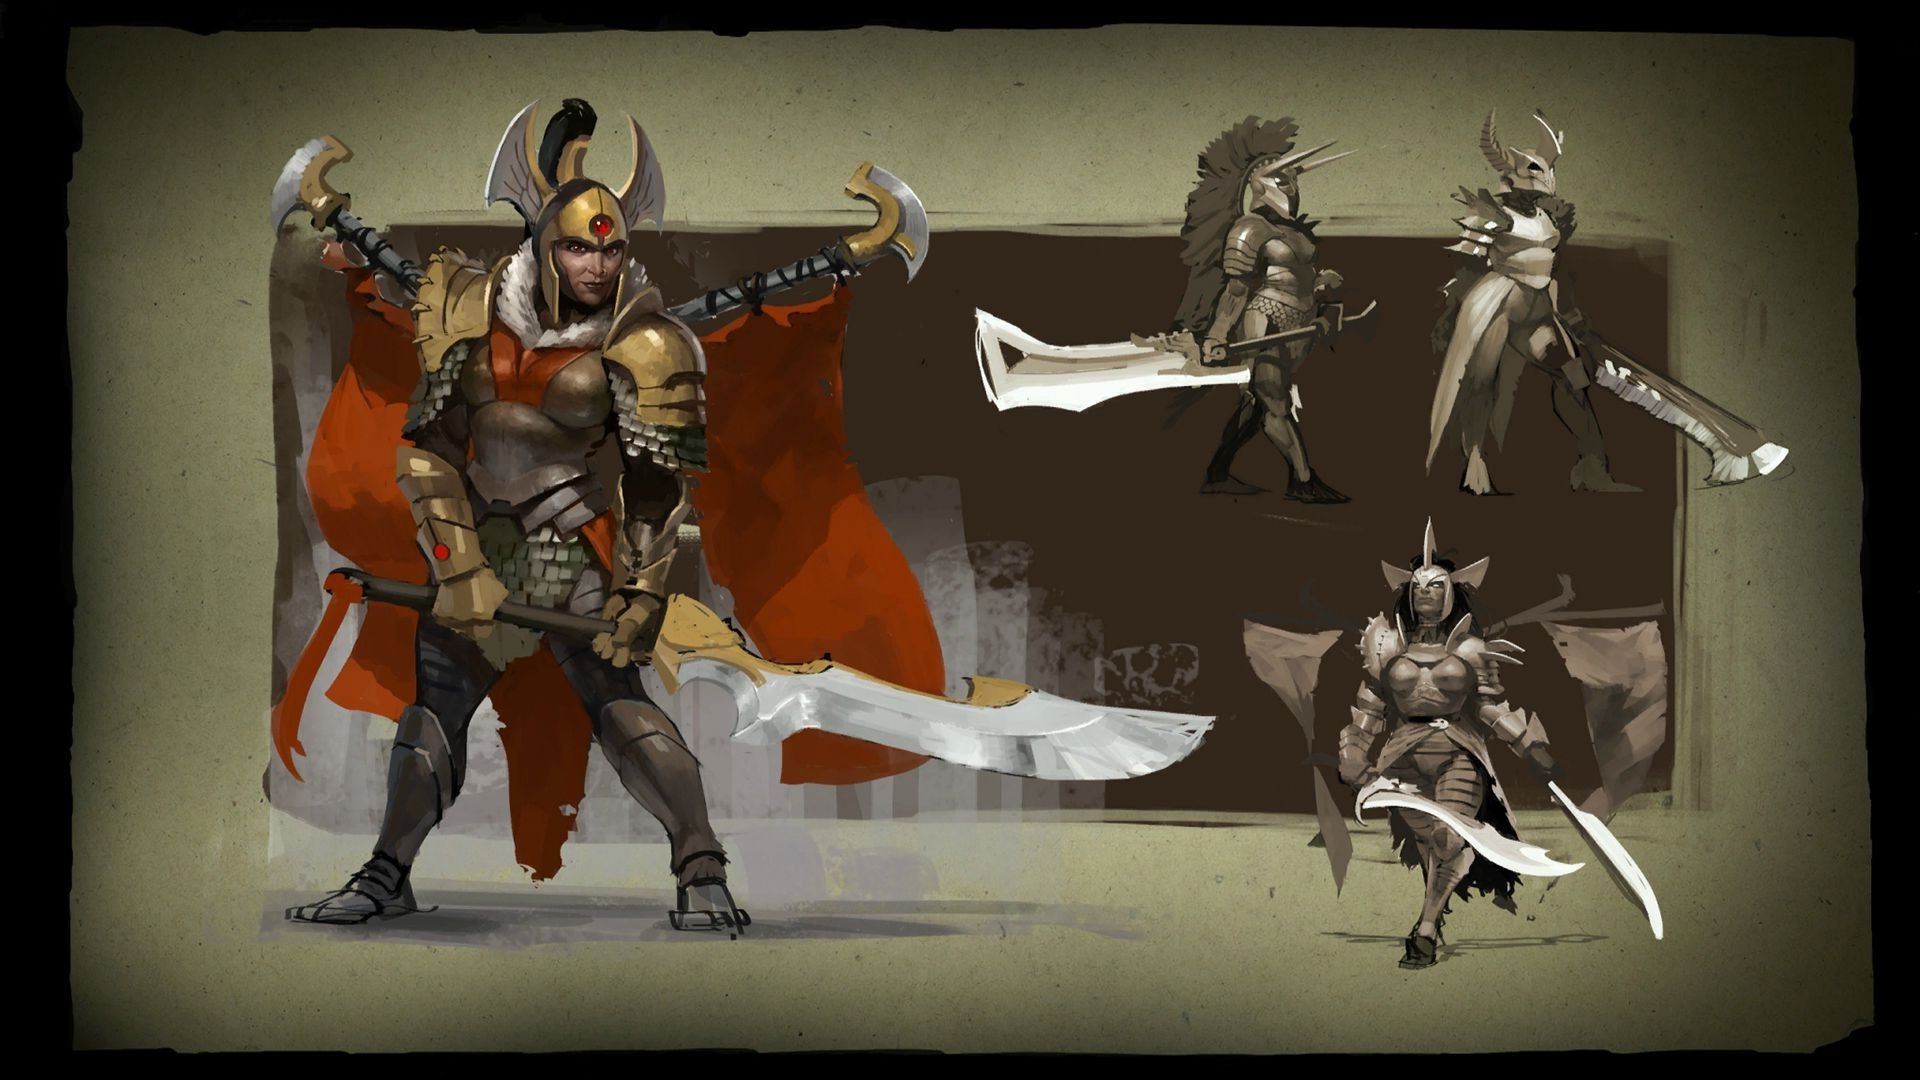 Defense Of The Ancient, Dota, Dota 2, Valve, Valve Corporation, Video Games, Online Games, Legion Commander, Sword, Knight, Heroes, Fantasy Art Wallpaper